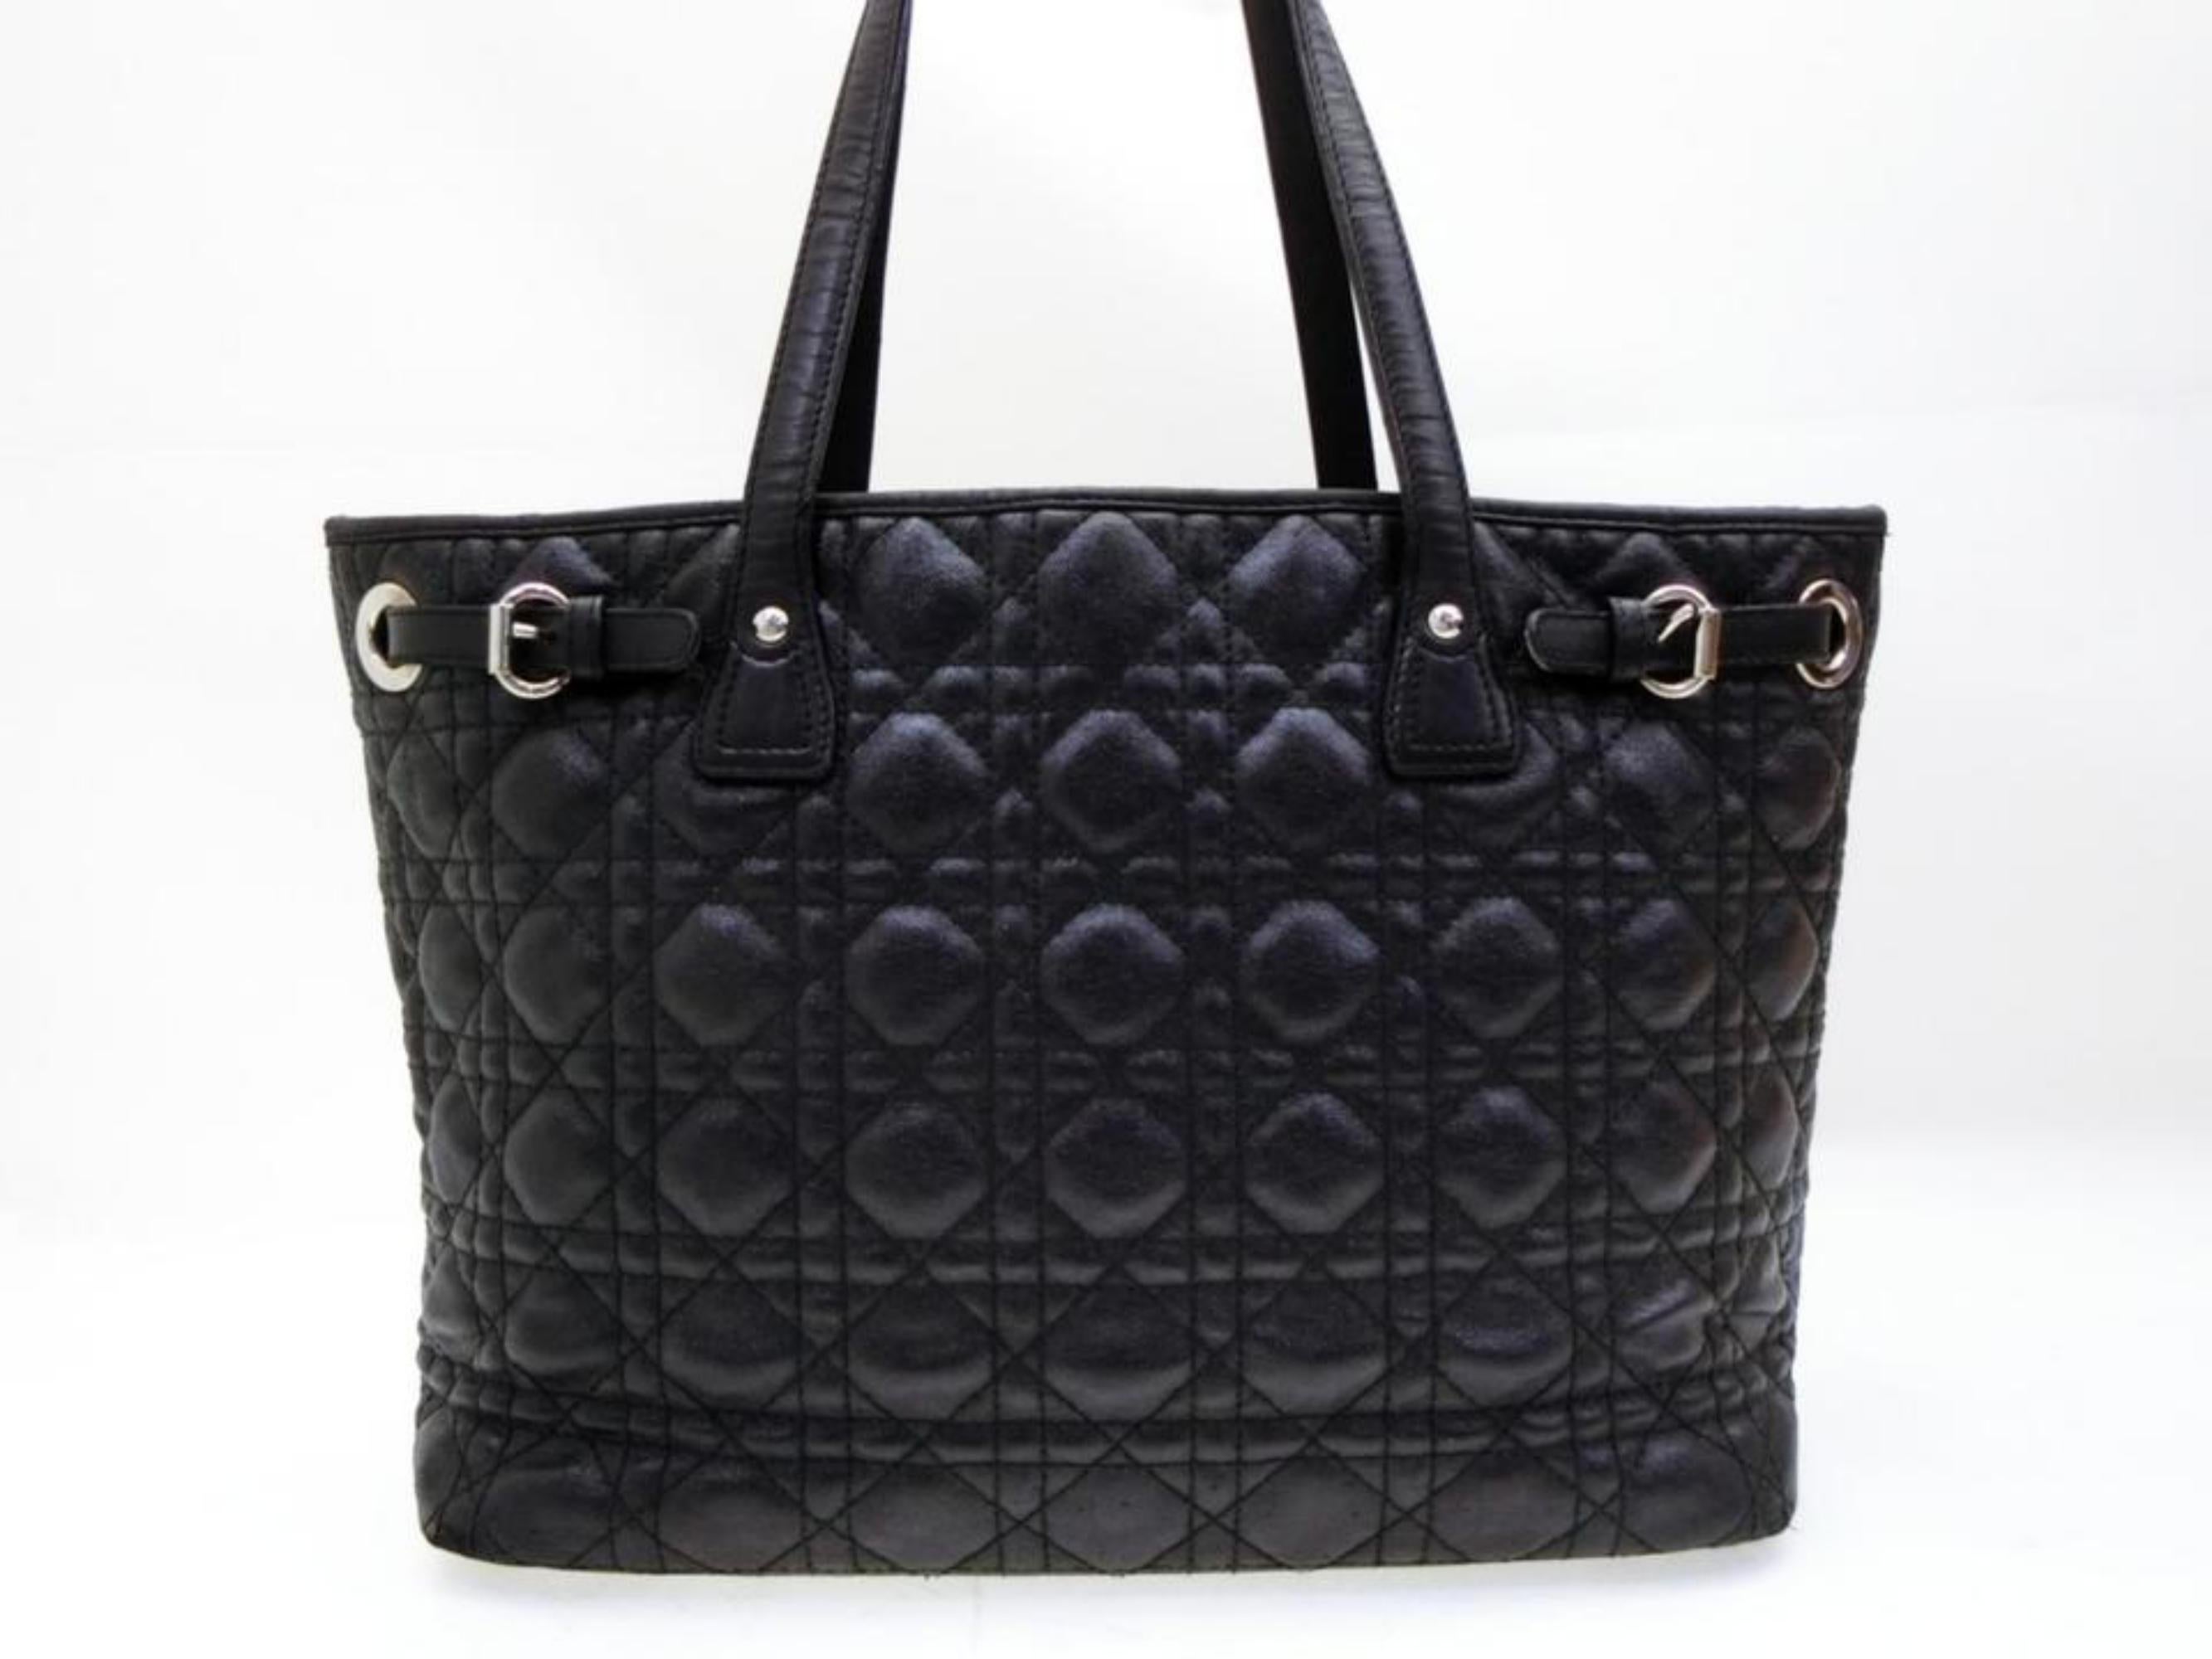 Dior Quilted Leather Cannage Shopper Tote 233793 Black Canvas Shoulder Bag For Sale 3